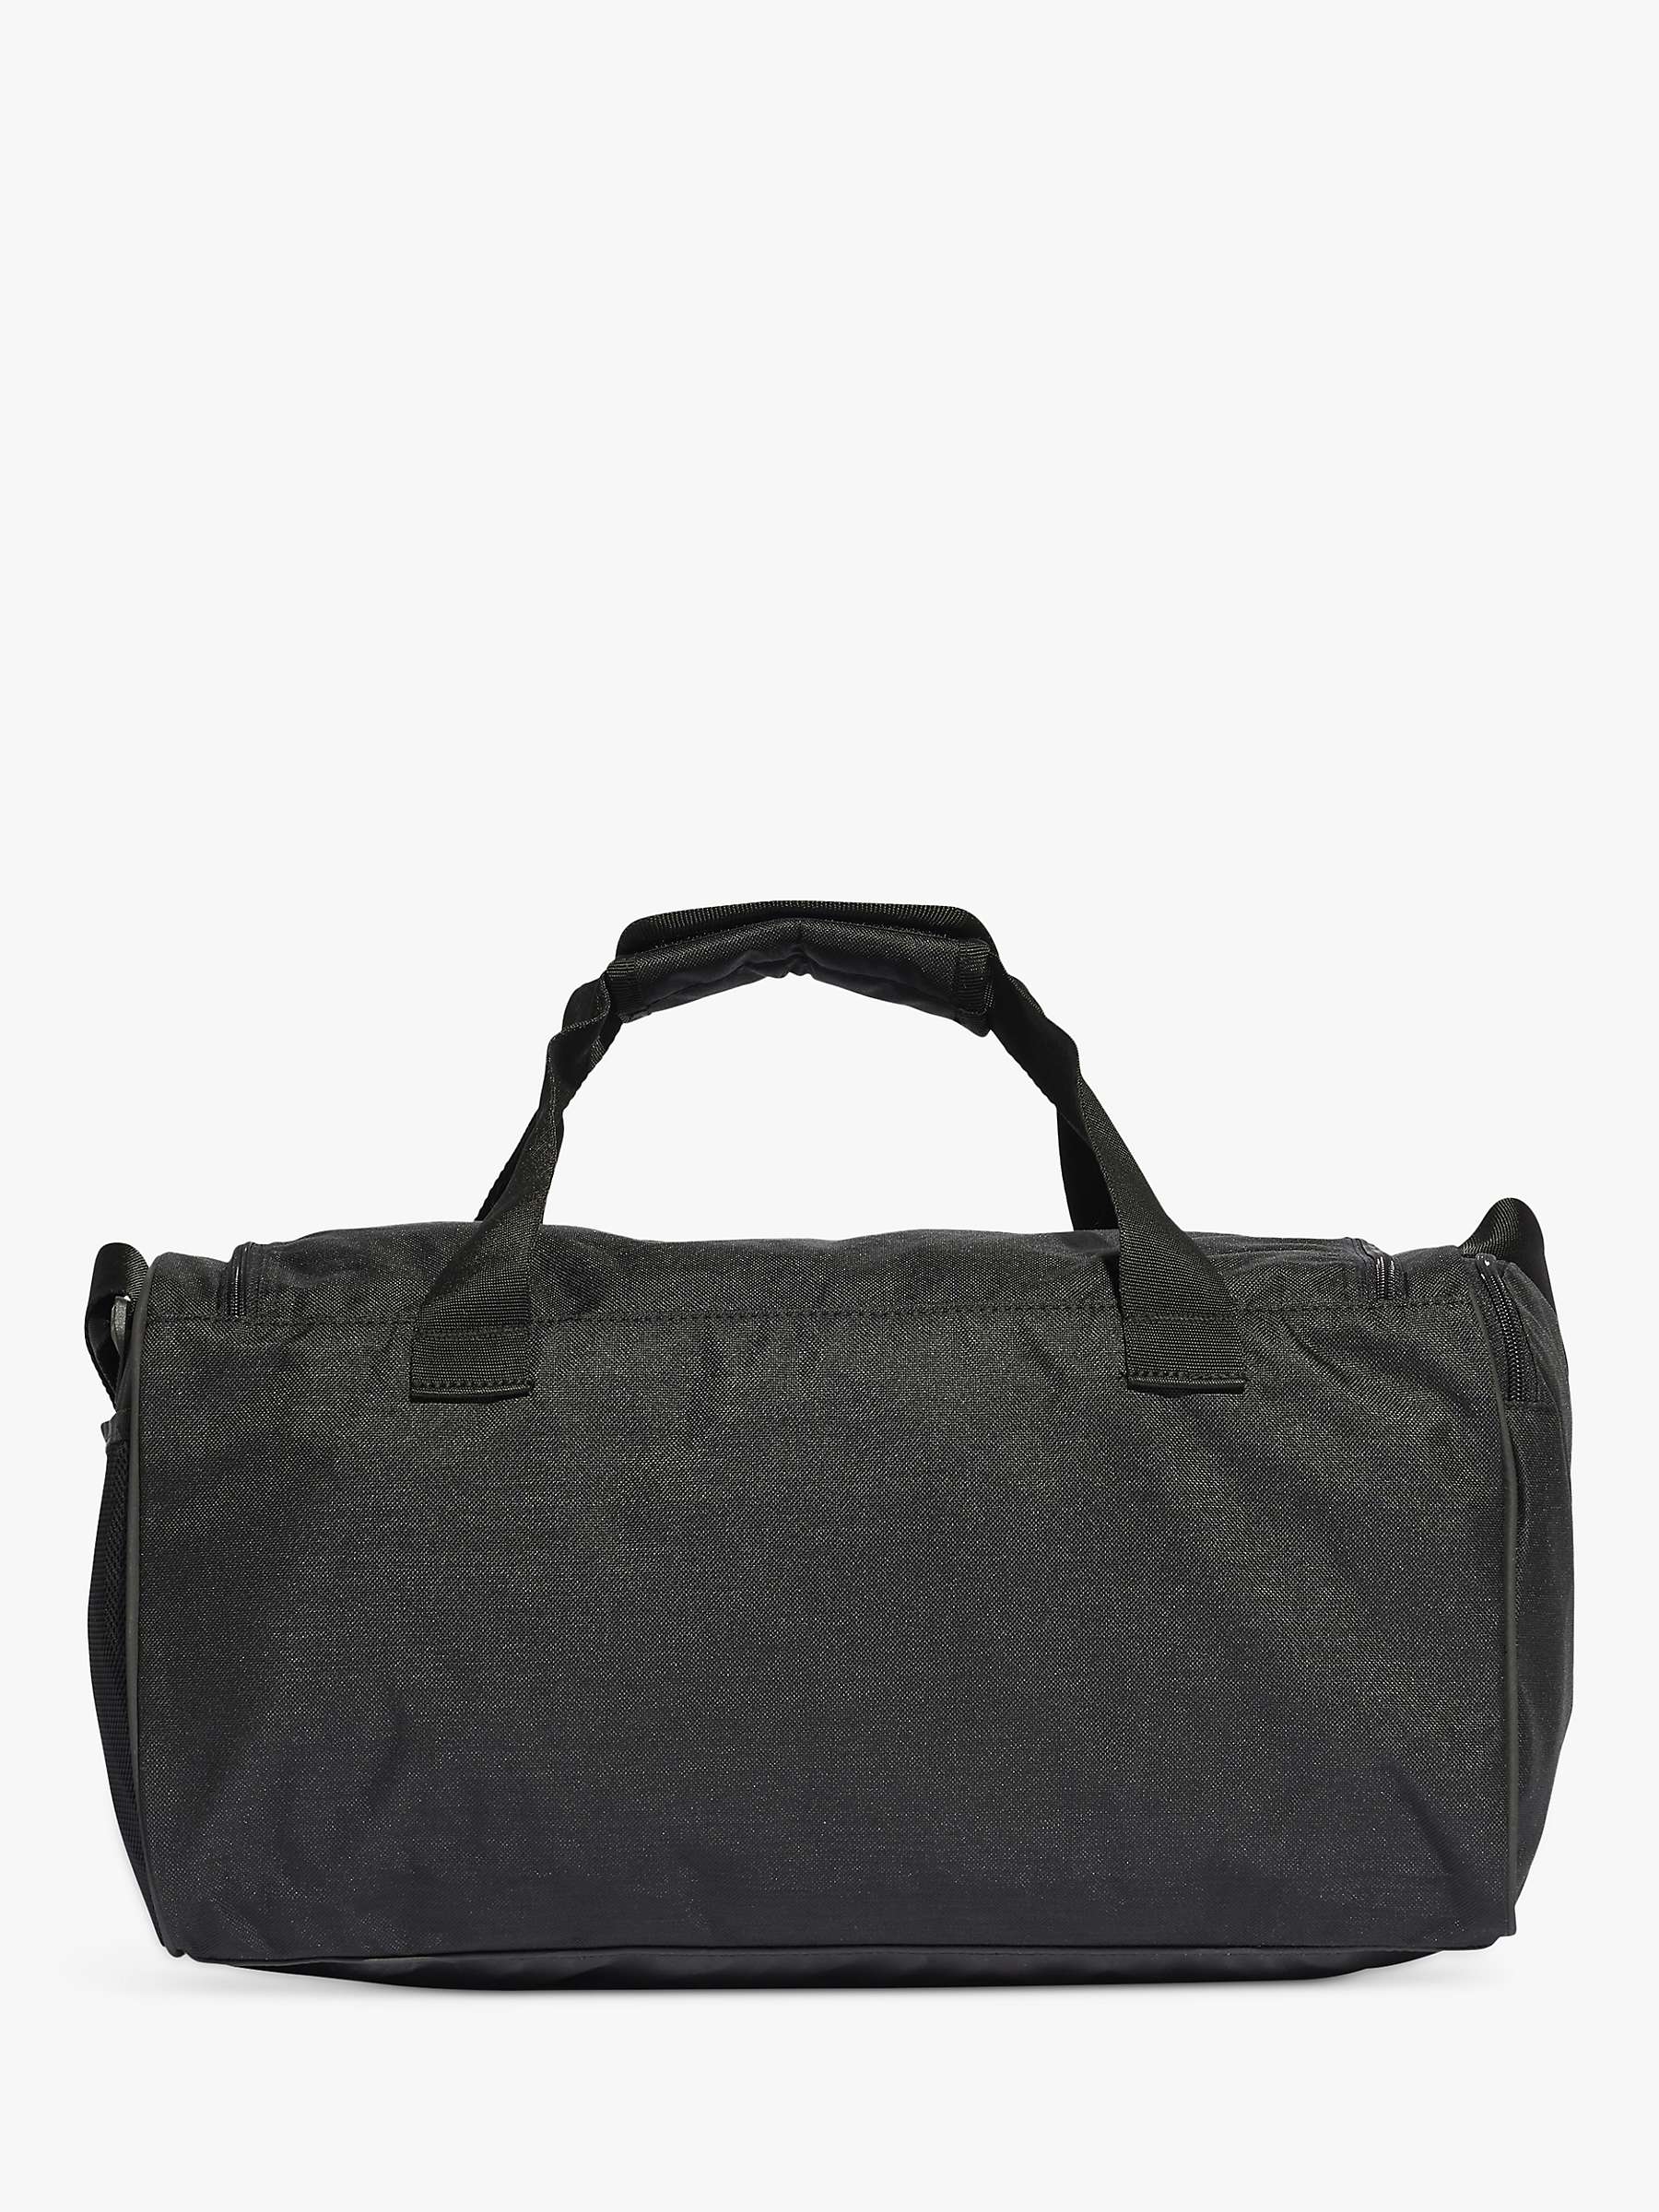 Buy adidas Essentials Duffel Bag Online at johnlewis.com